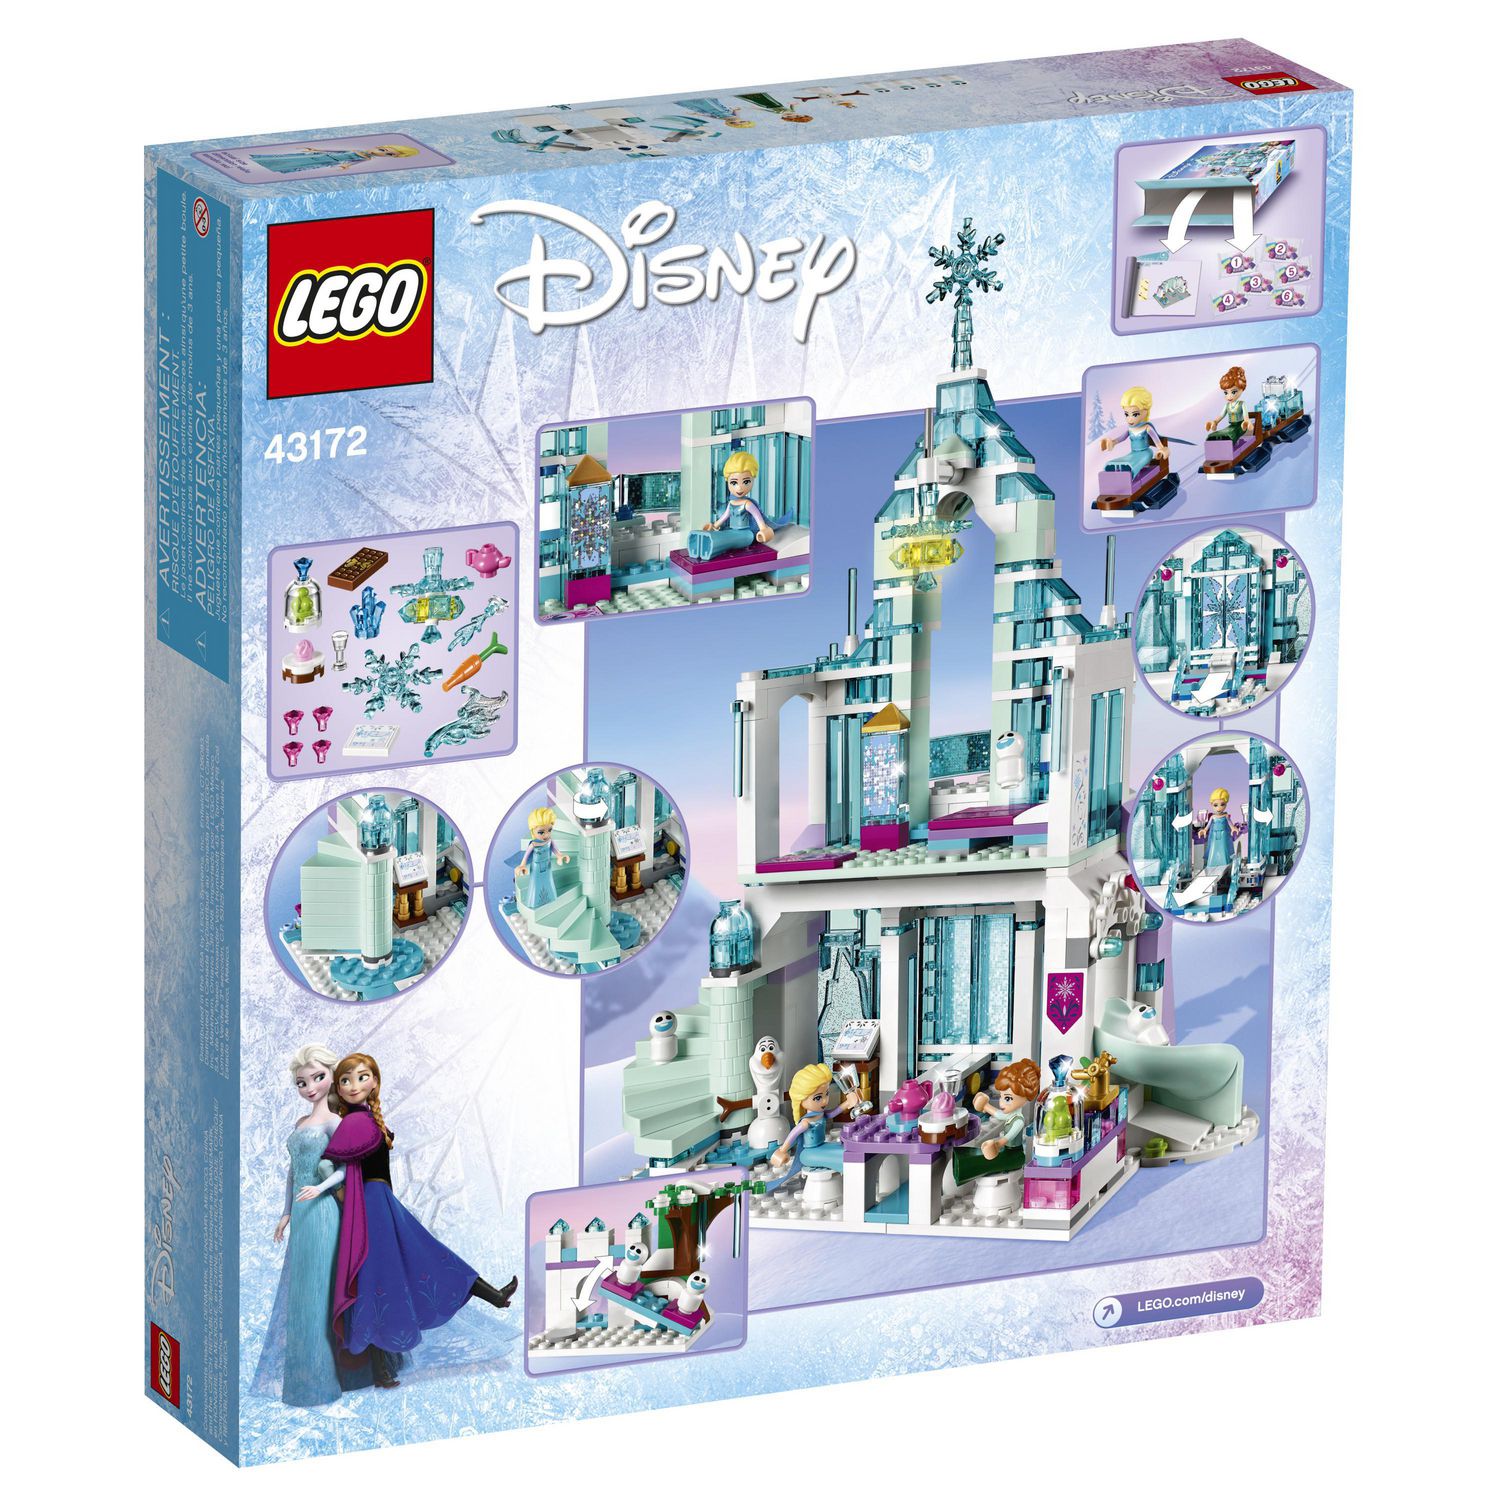 LEGO Disney Frozen Elsa's Magical Ice Palace 43172 Building Kit